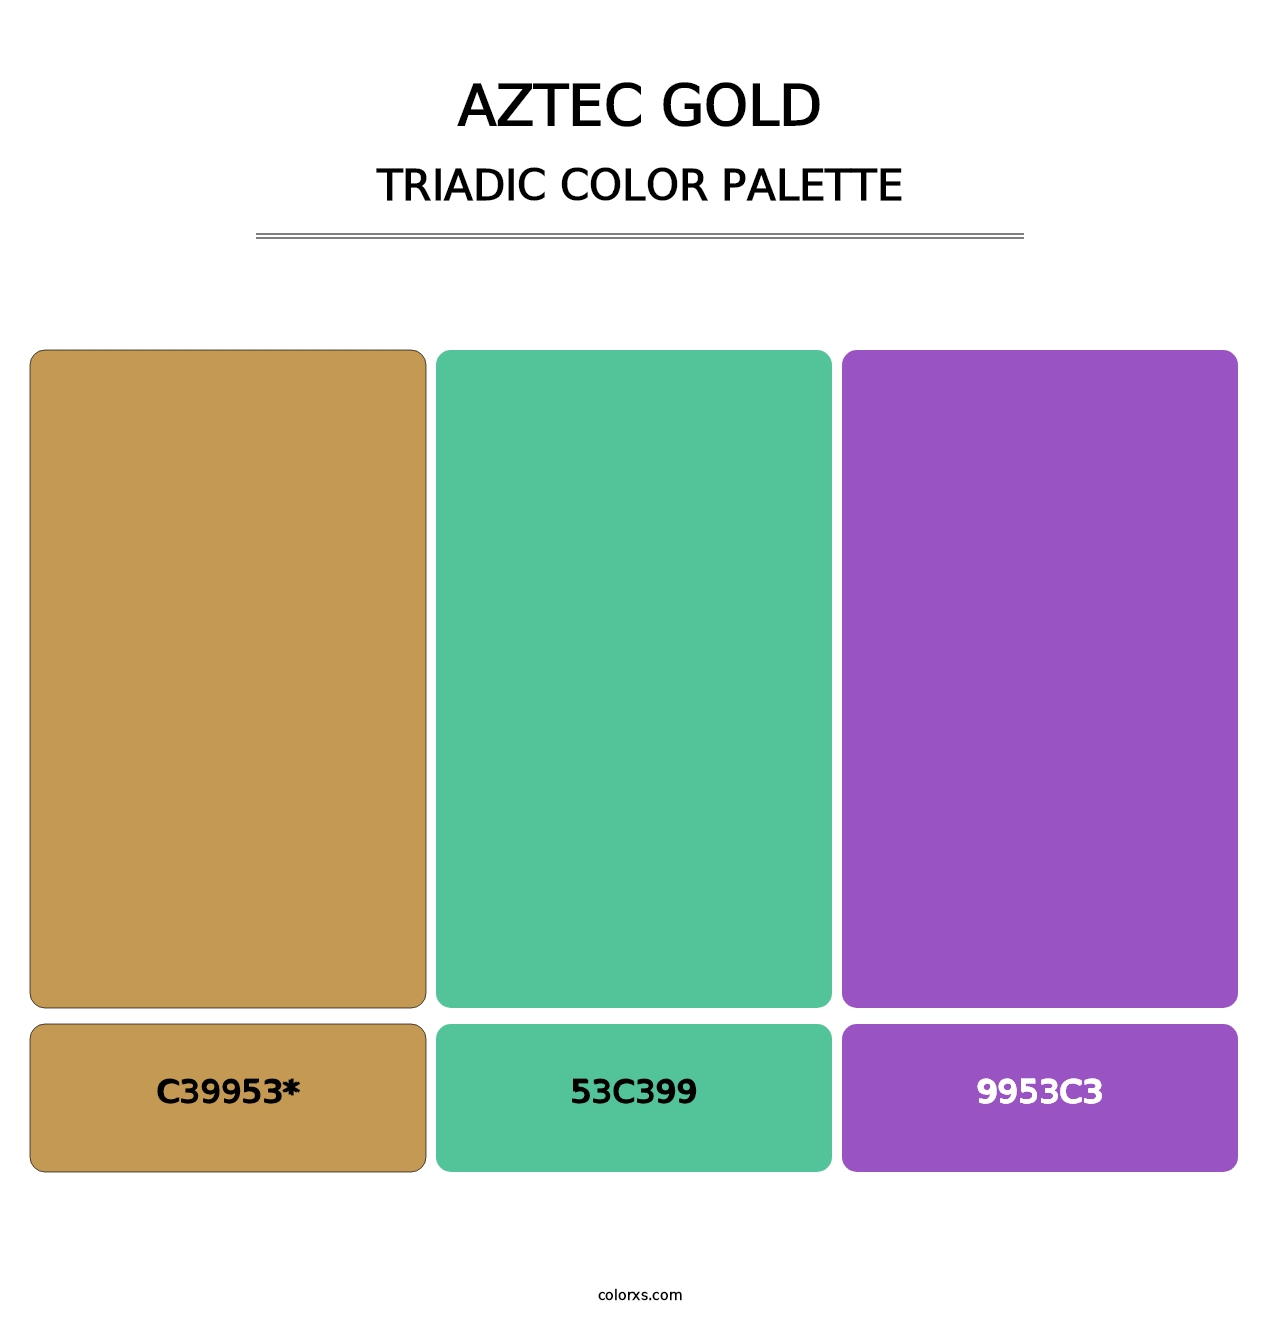 Aztec Gold - Triadic Color Palette